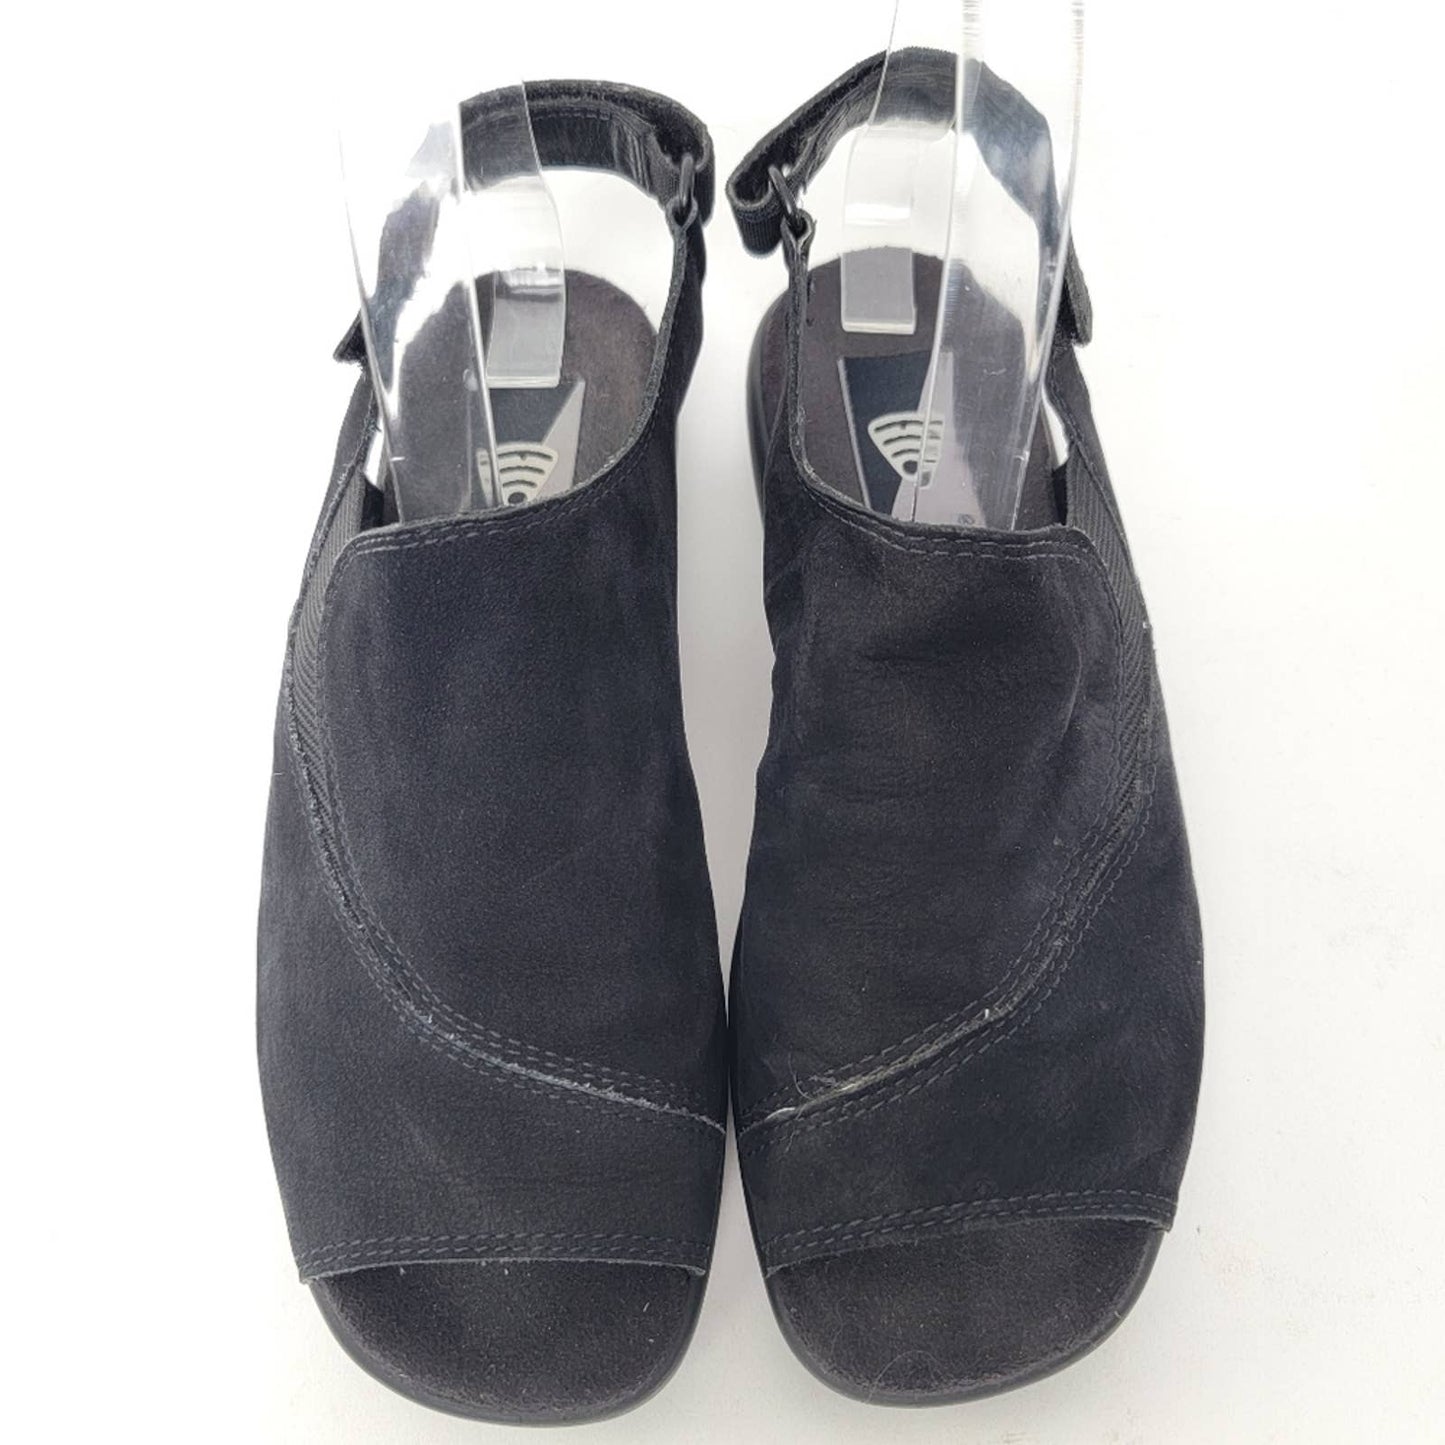 Ecco Black Suede Peep Toe Sandals - 6